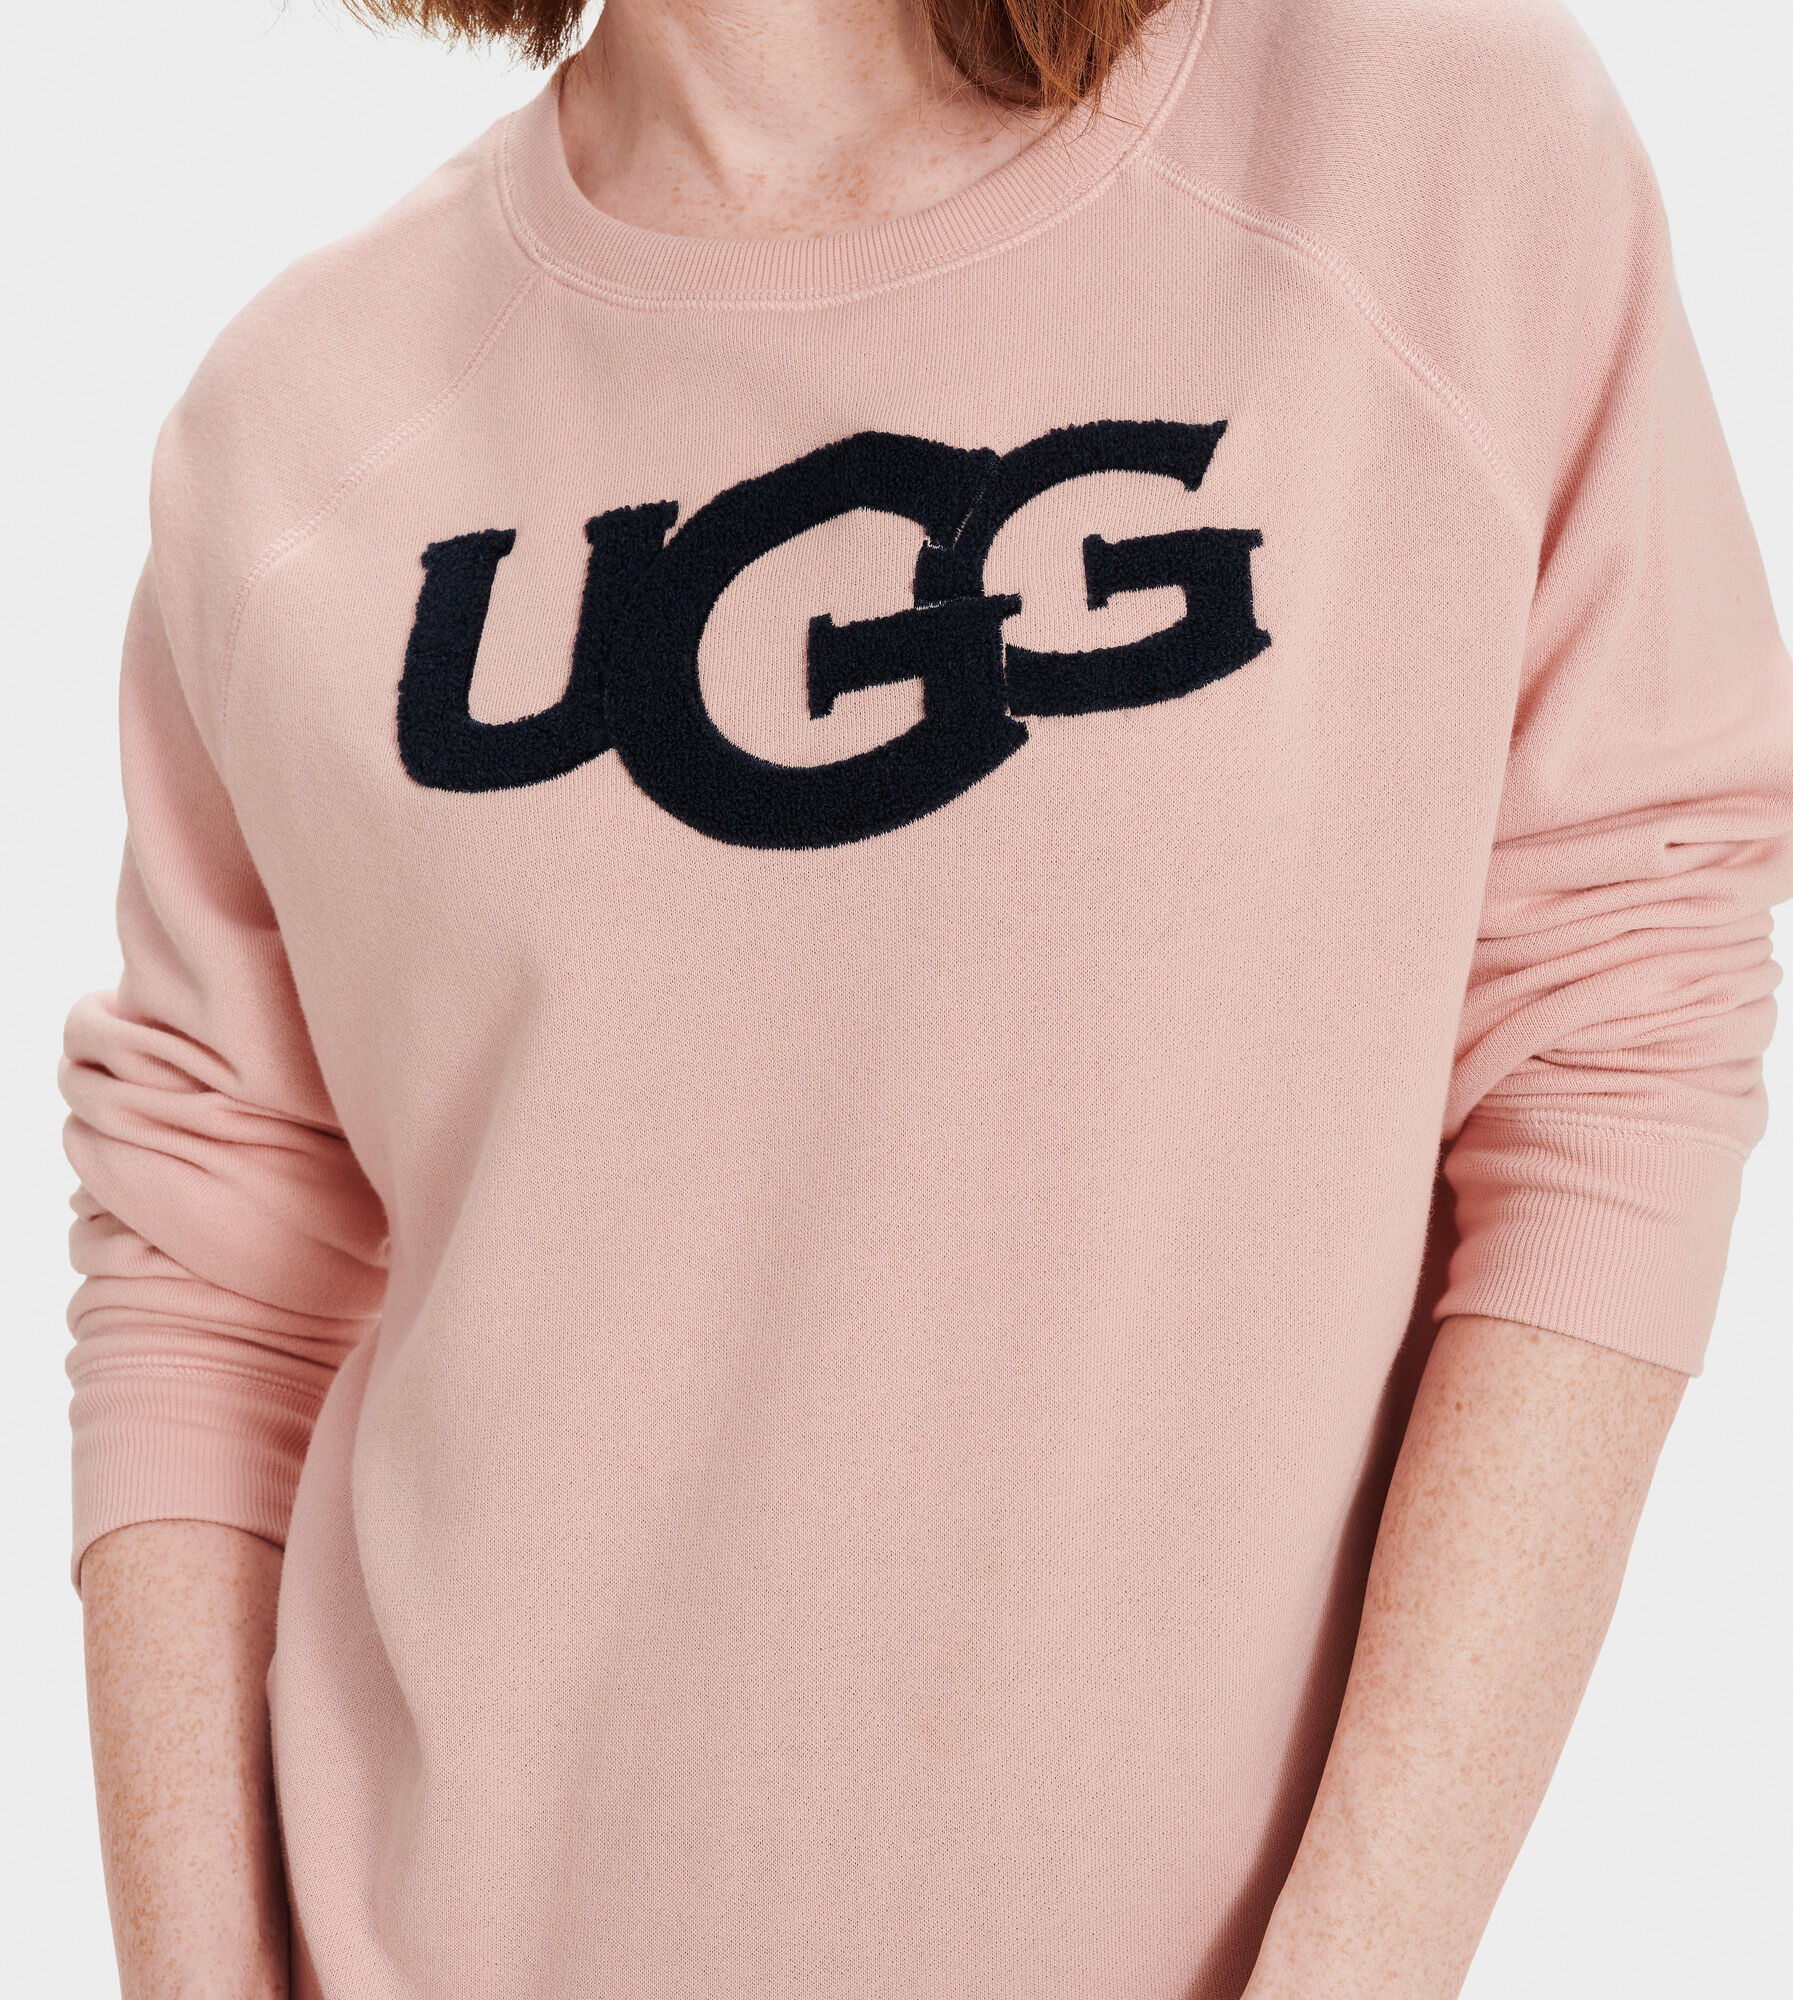 Ugg Fuzzy Logo Sweatshirt Online, 57% OFF | www.pegasusaerogroup.com